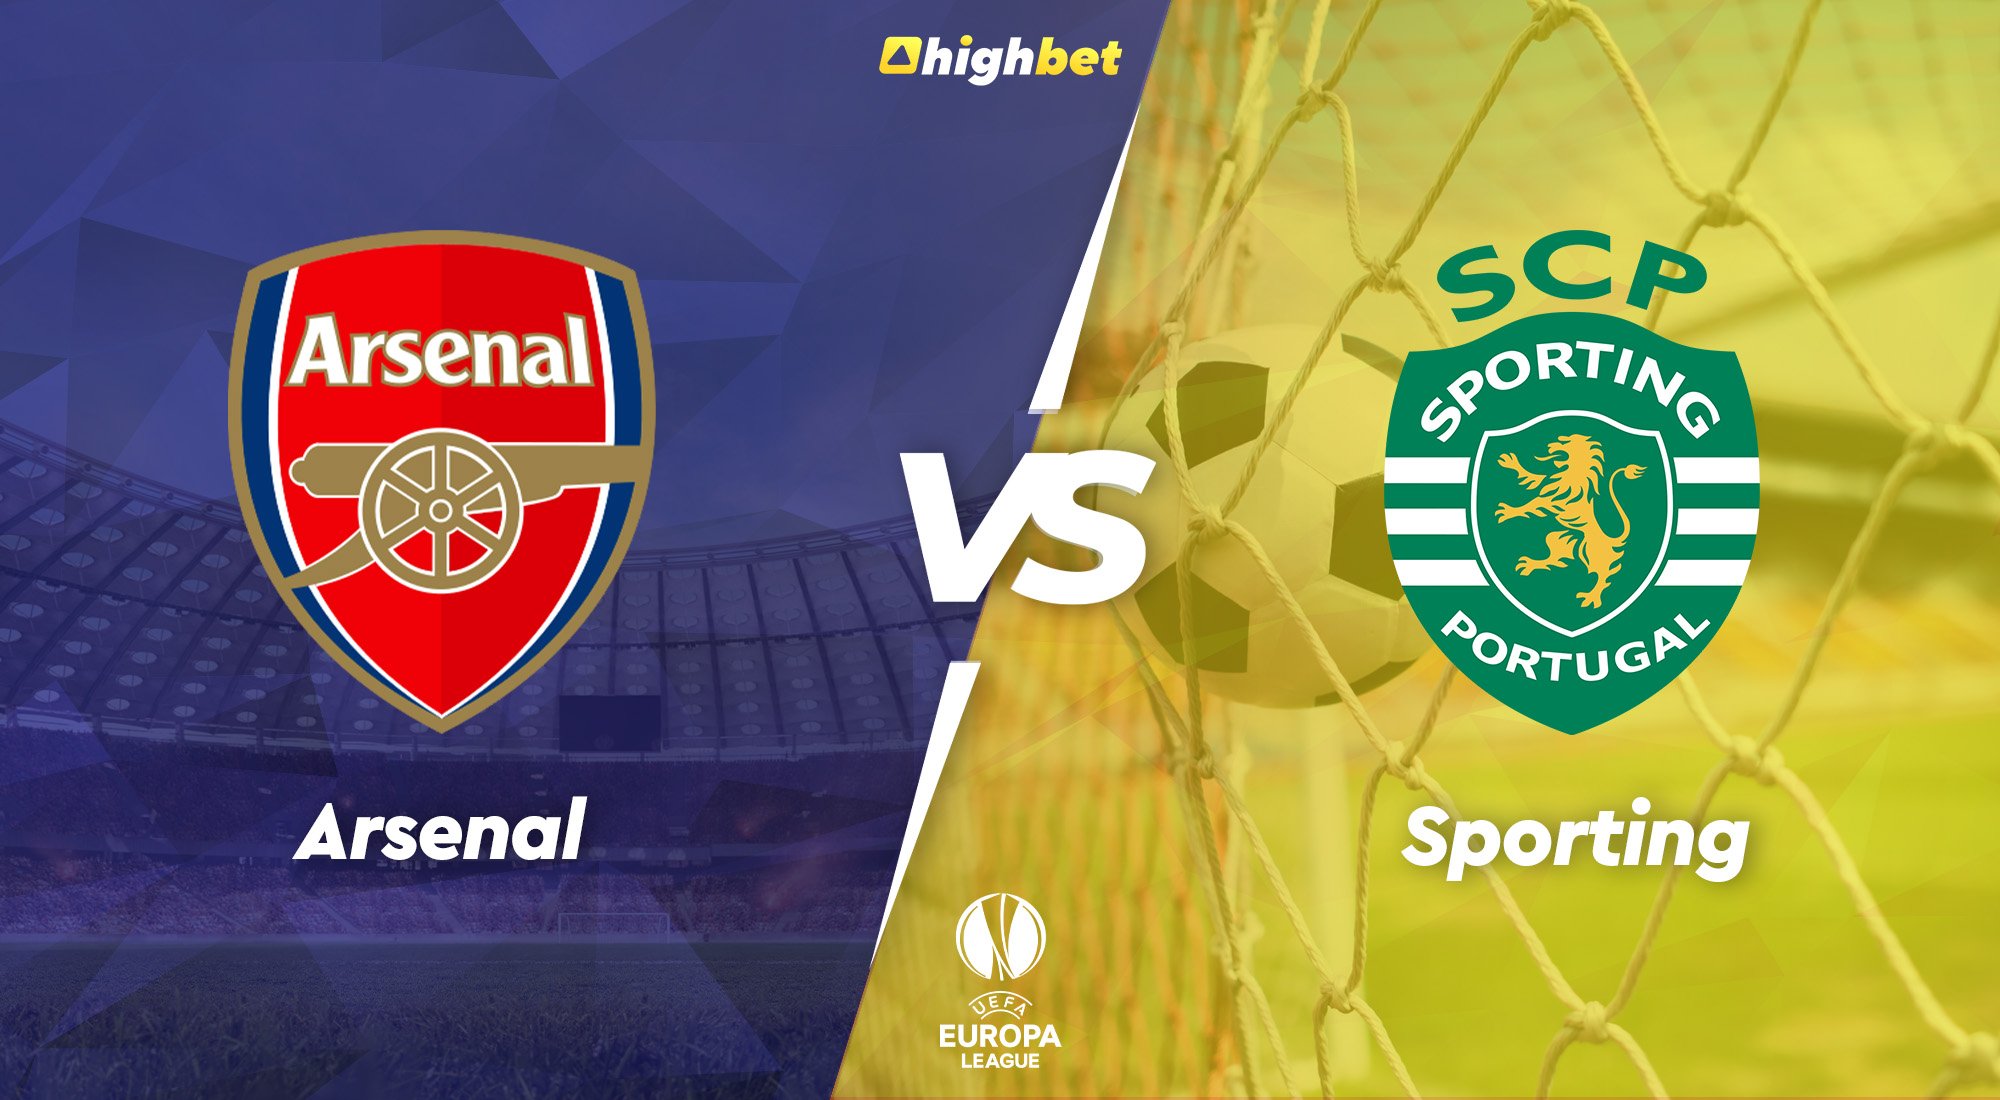 Arsenal vs Sporting - highbet UEFA Europa League Pre-Match Analysis